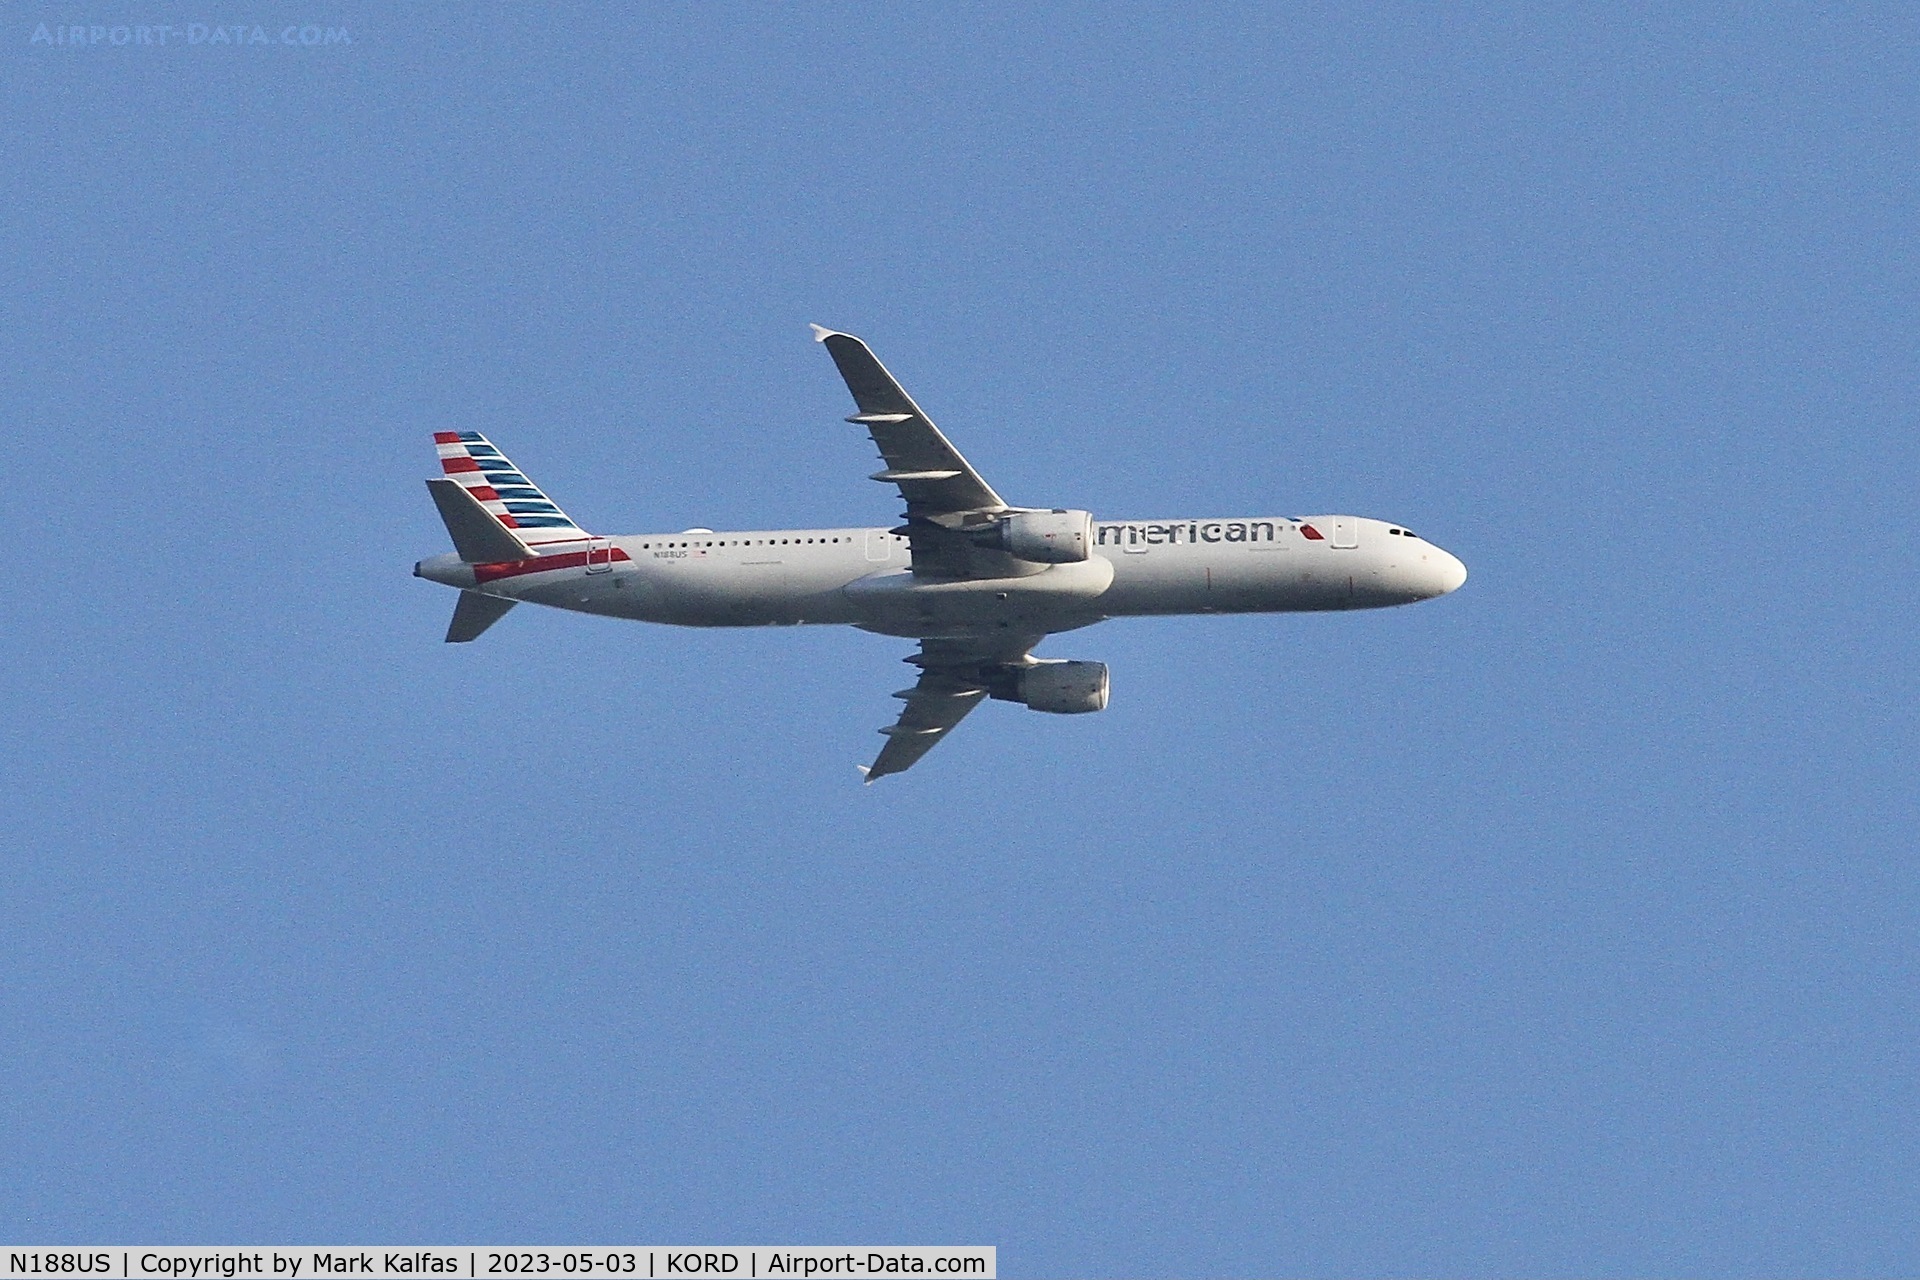 N188US, 2002 Airbus A321-211 C/N 1724, American Airbus A321-211, N188US arriving at ORD from ATL